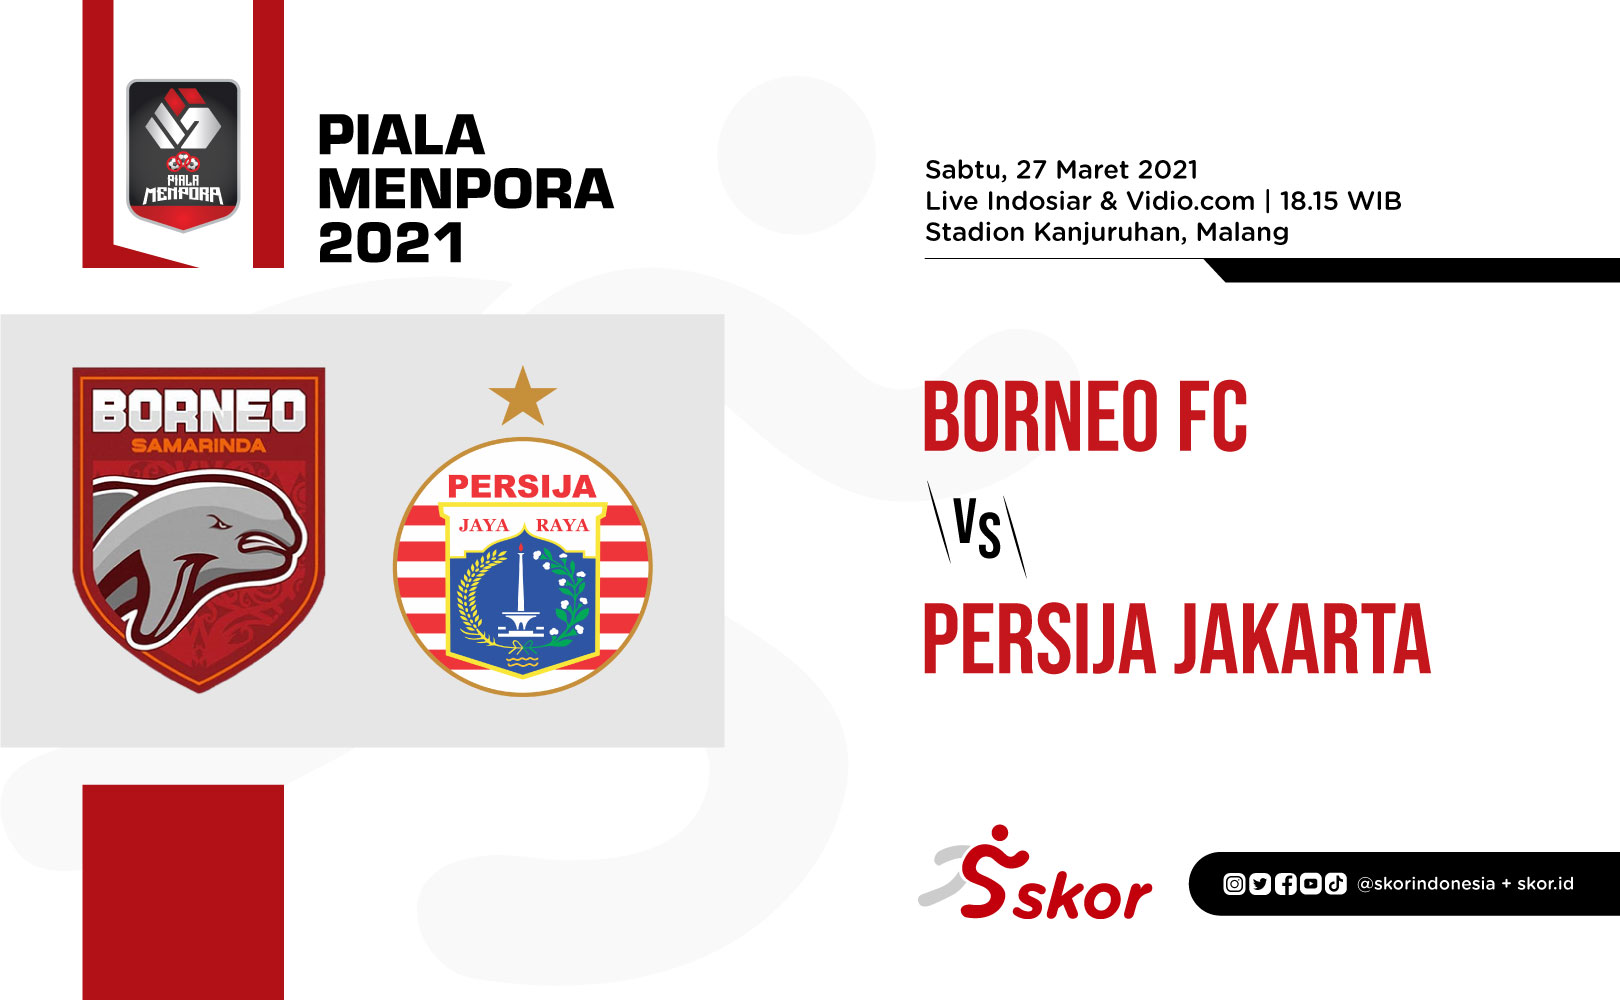 Man of The Match Borneo FC vs Persija: Marc Klok